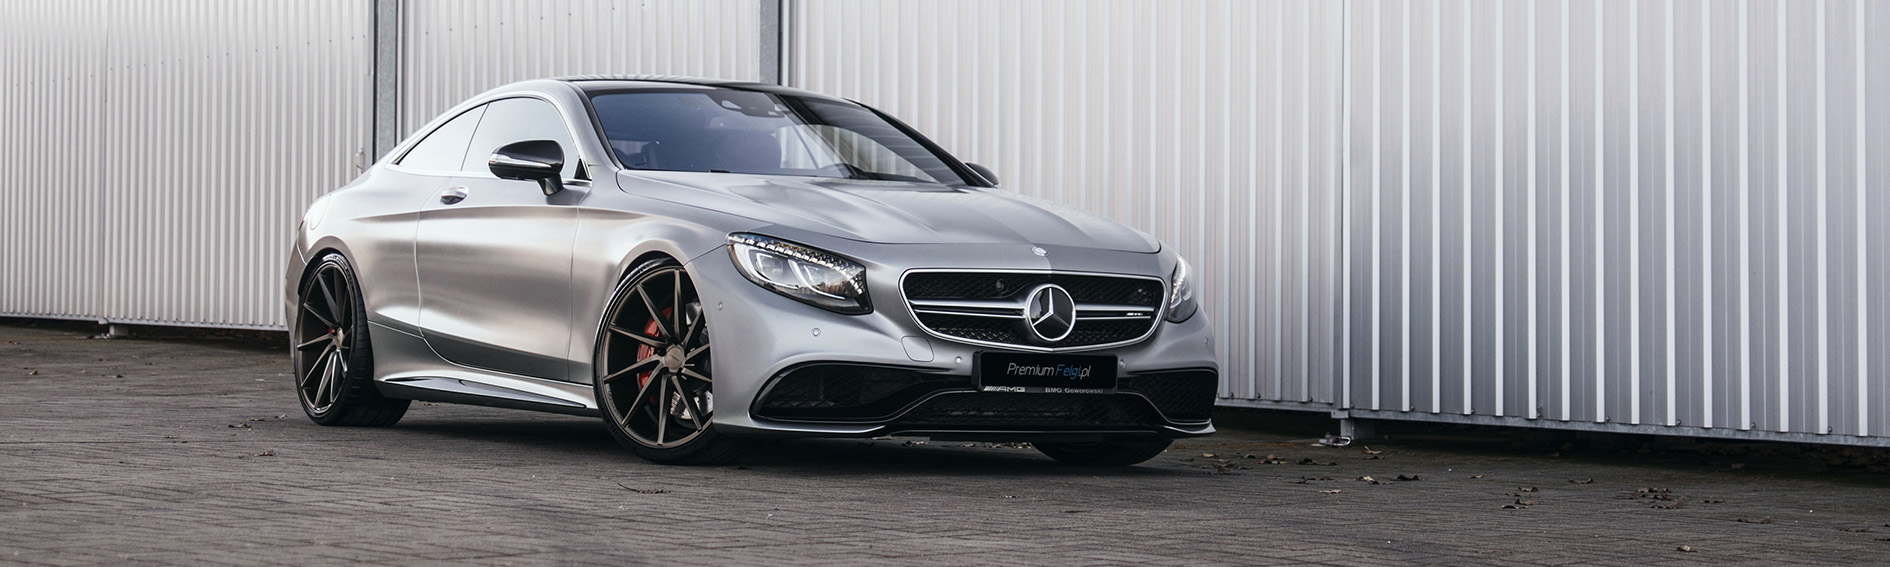 Realizacja - Felgi do Mercedes-AMG S63 Coupé | Vossen CVT - PremiumFelgi